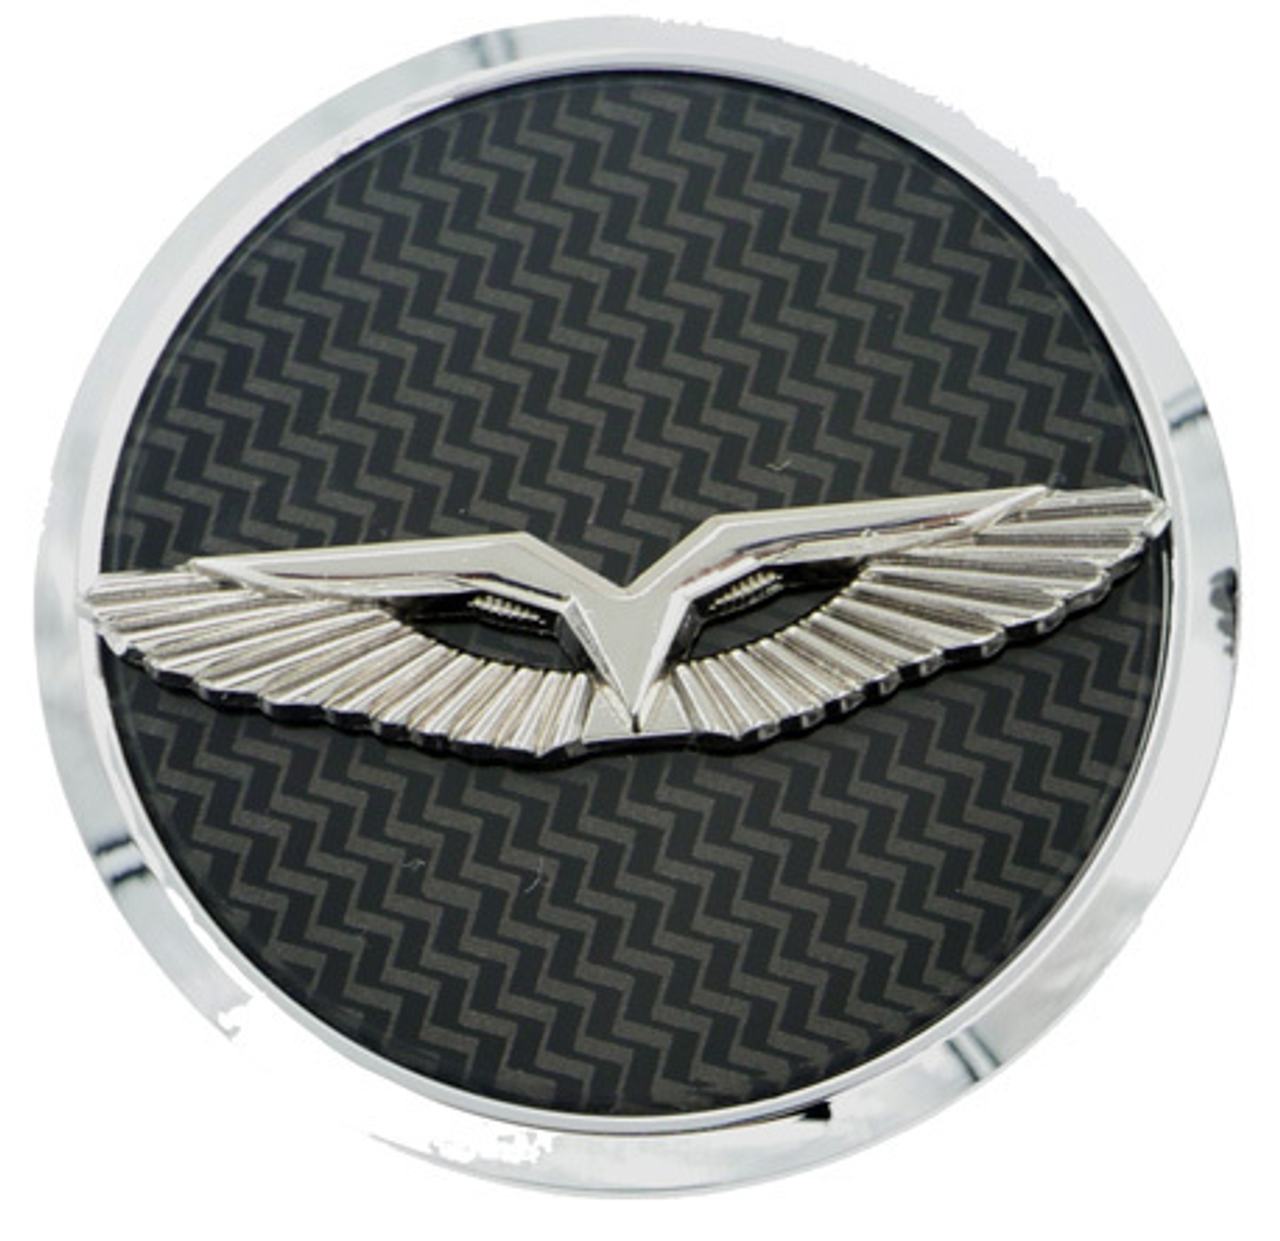 ANZU-T Steering Wheel Emblem for GM Models (4 Colors) 